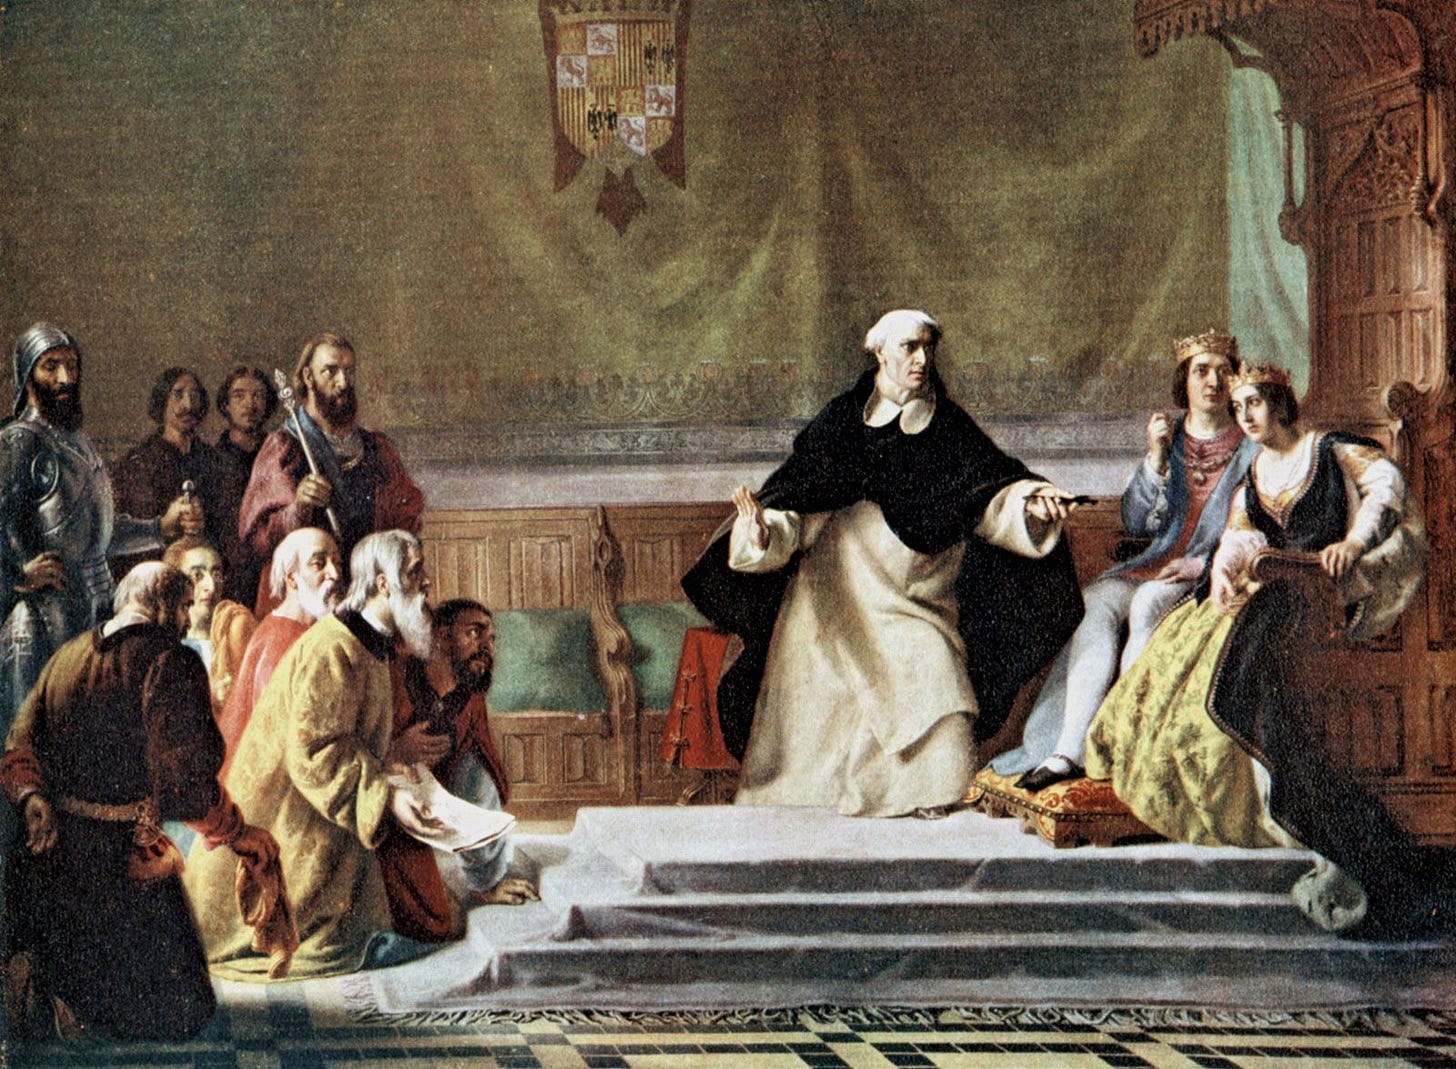 Spanish Inquisition | Definition, History, & Facts | Britannica